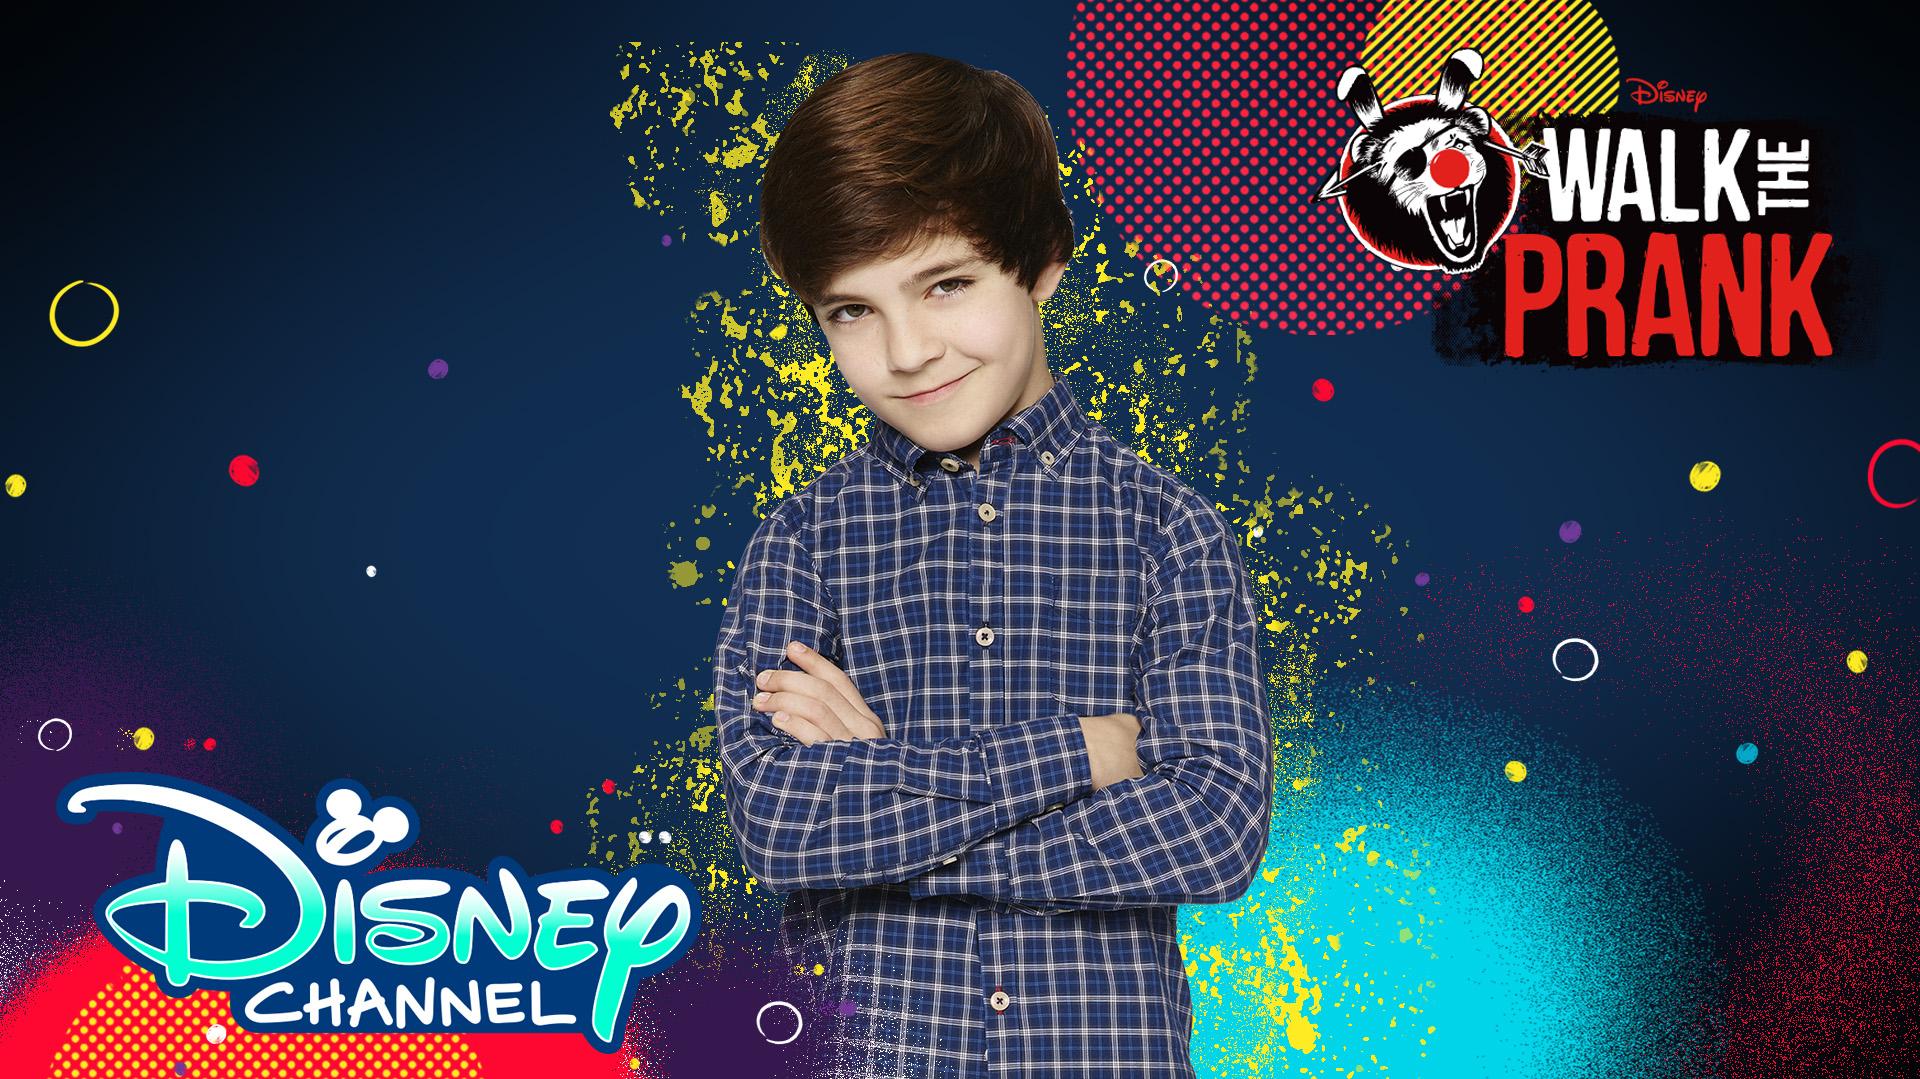 Meet Herman Walk The Prank Disney Channel